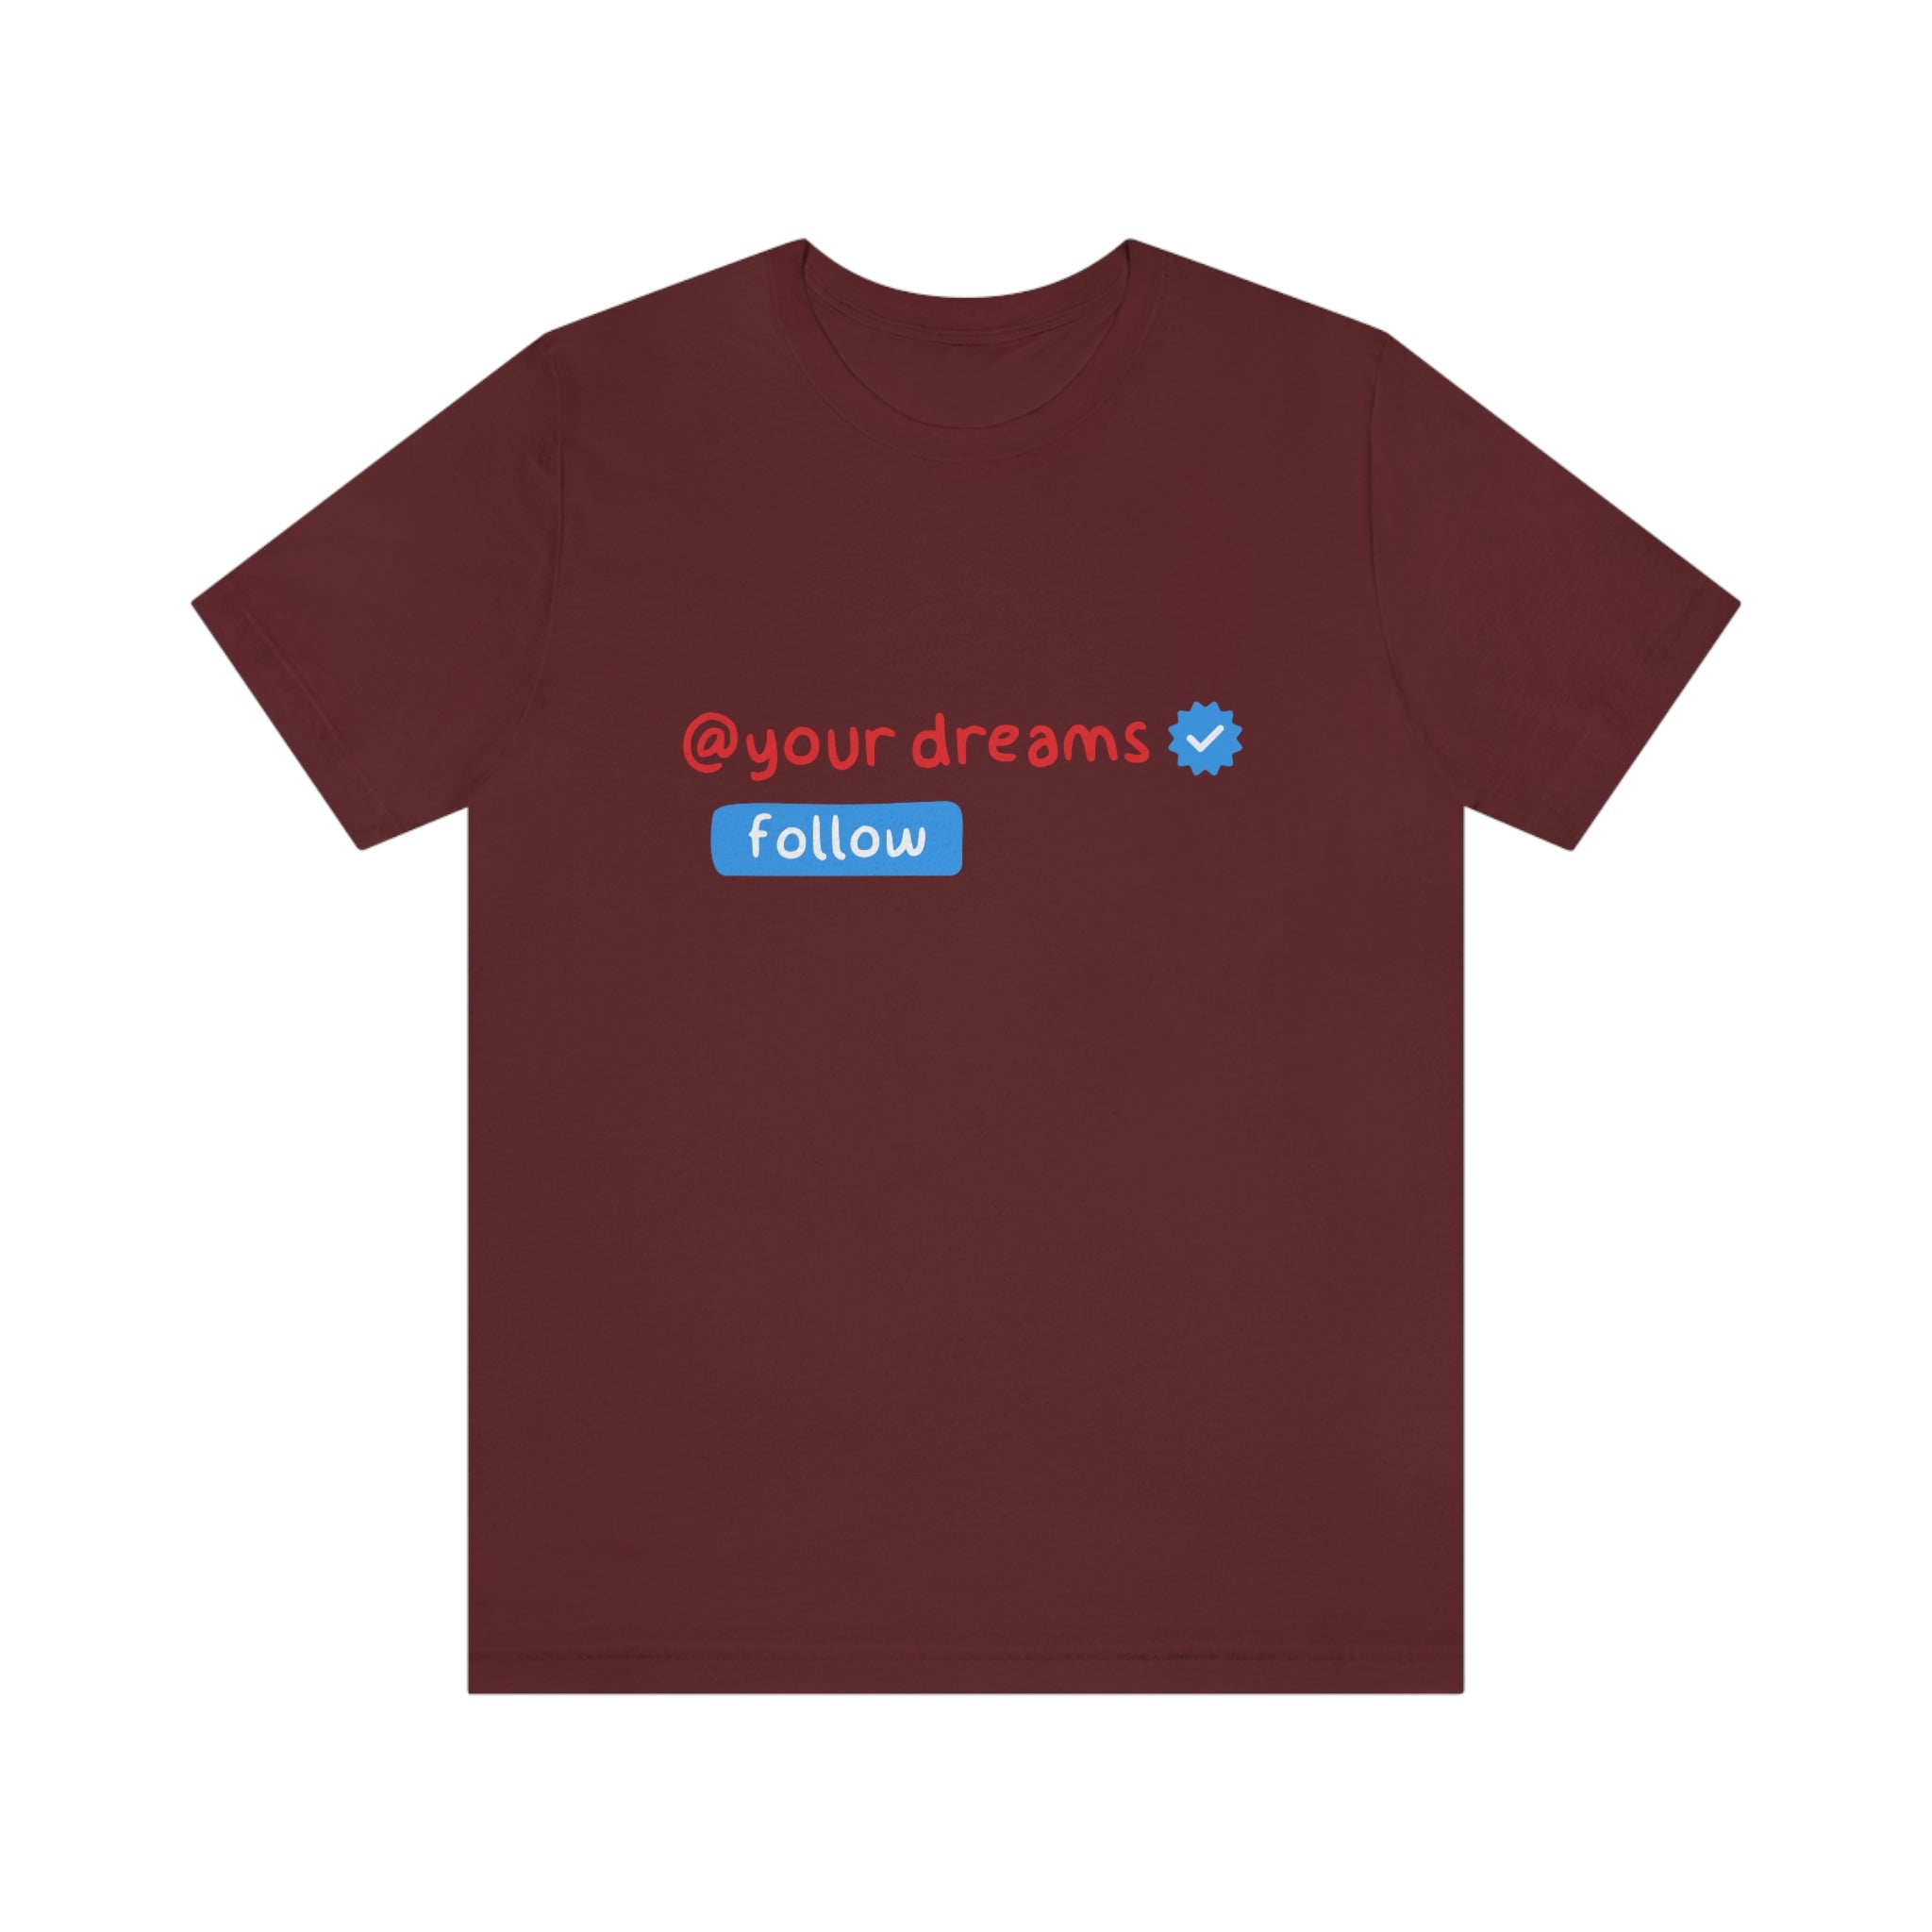 Follow Your Dreams Shirt : 100% Comfy Cotton, T-Shirt by Bella+Canvas